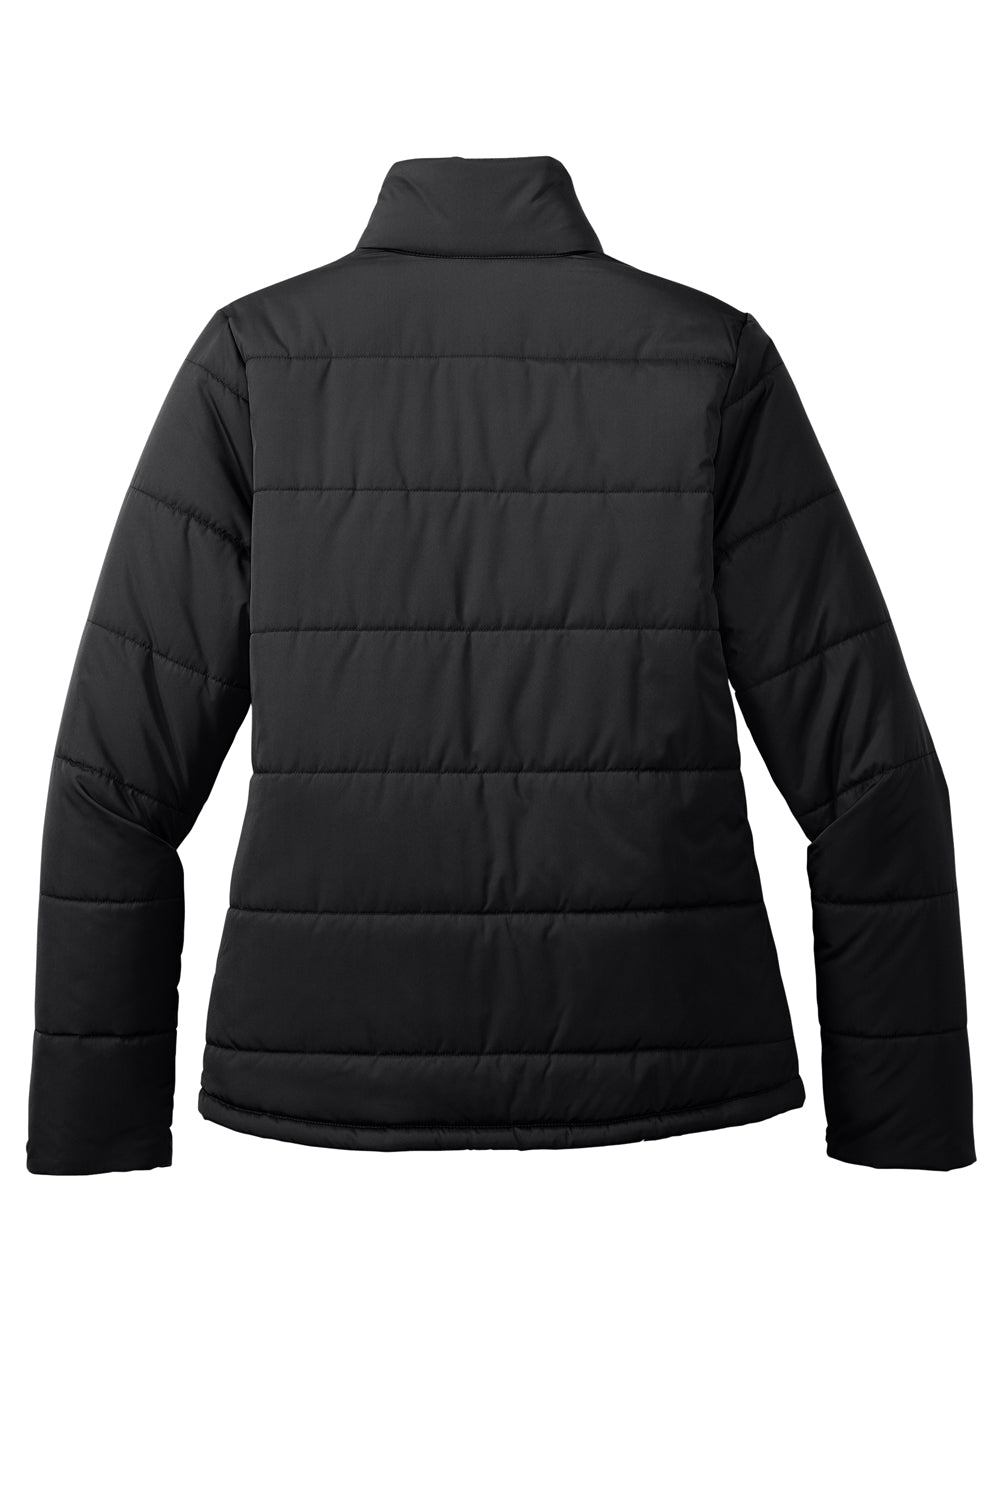 Port Authority L852 Womens Full Zip Puffer Jacket Deep Black Flat Back